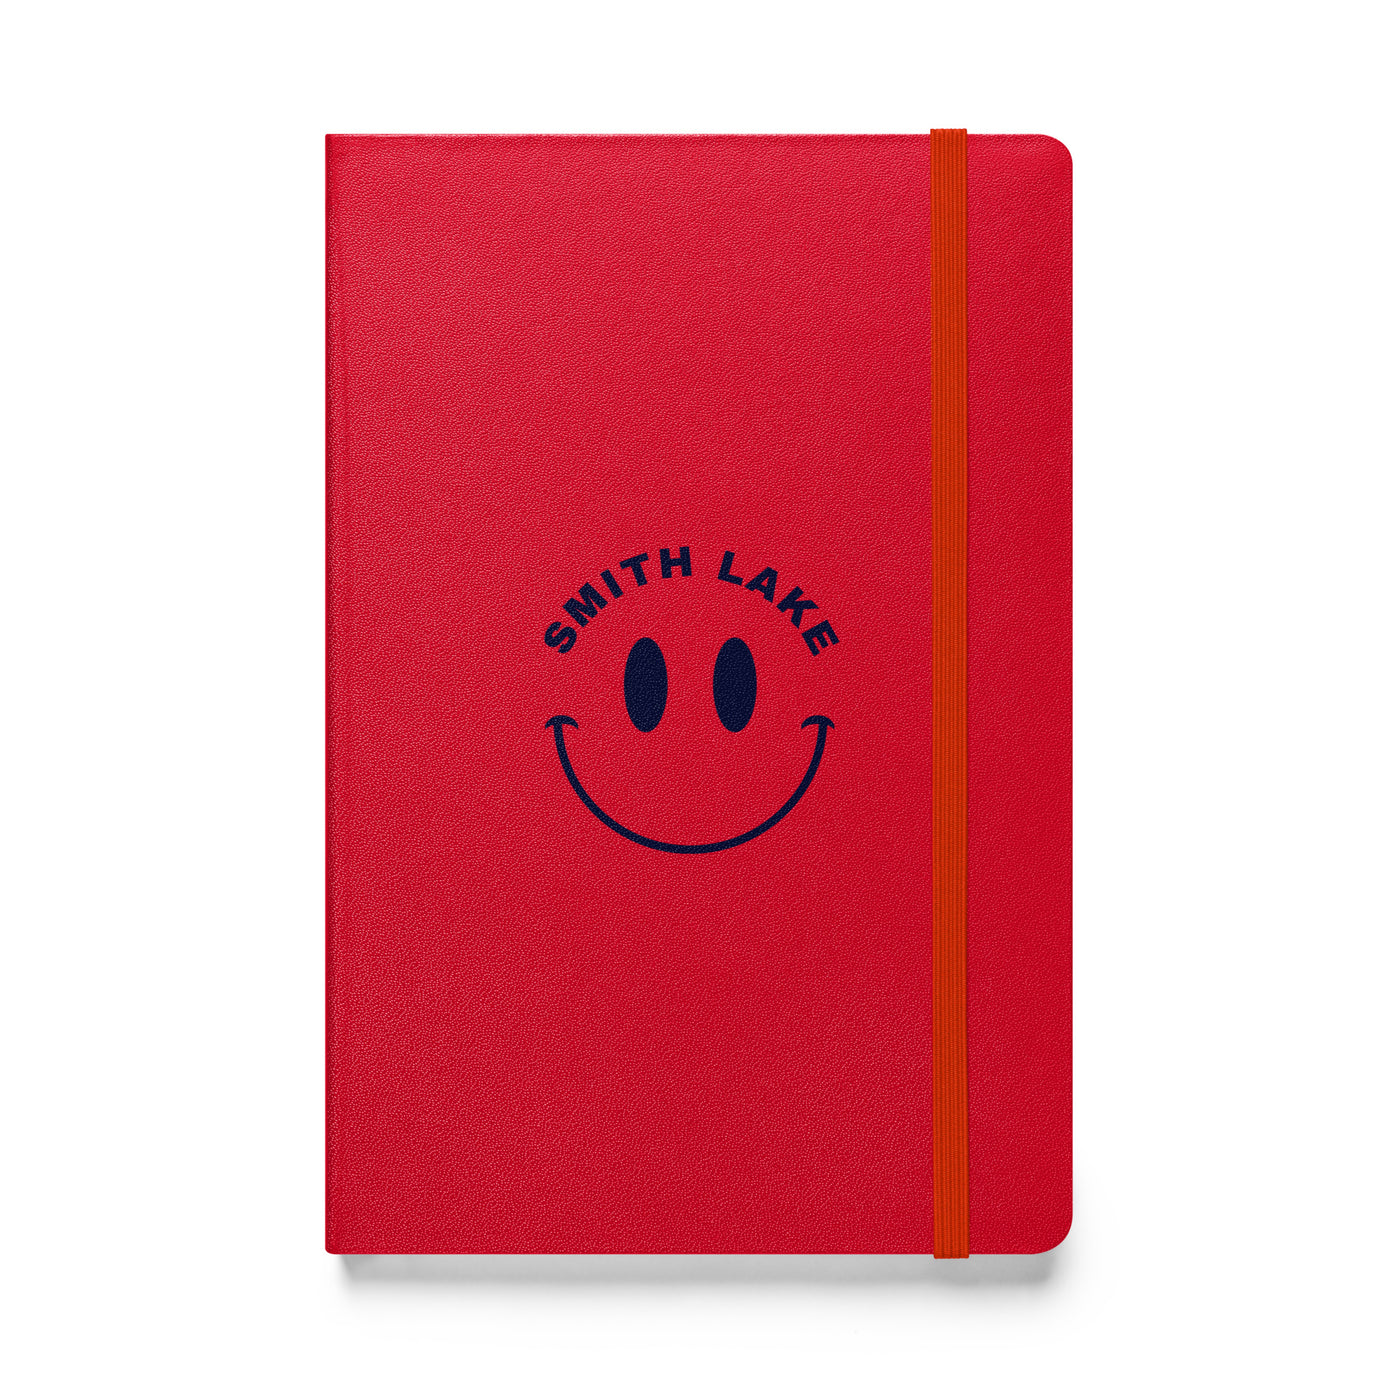 Smith Lake Hardcover Bound Notebook Notebooks Ezra's Clothing Red  